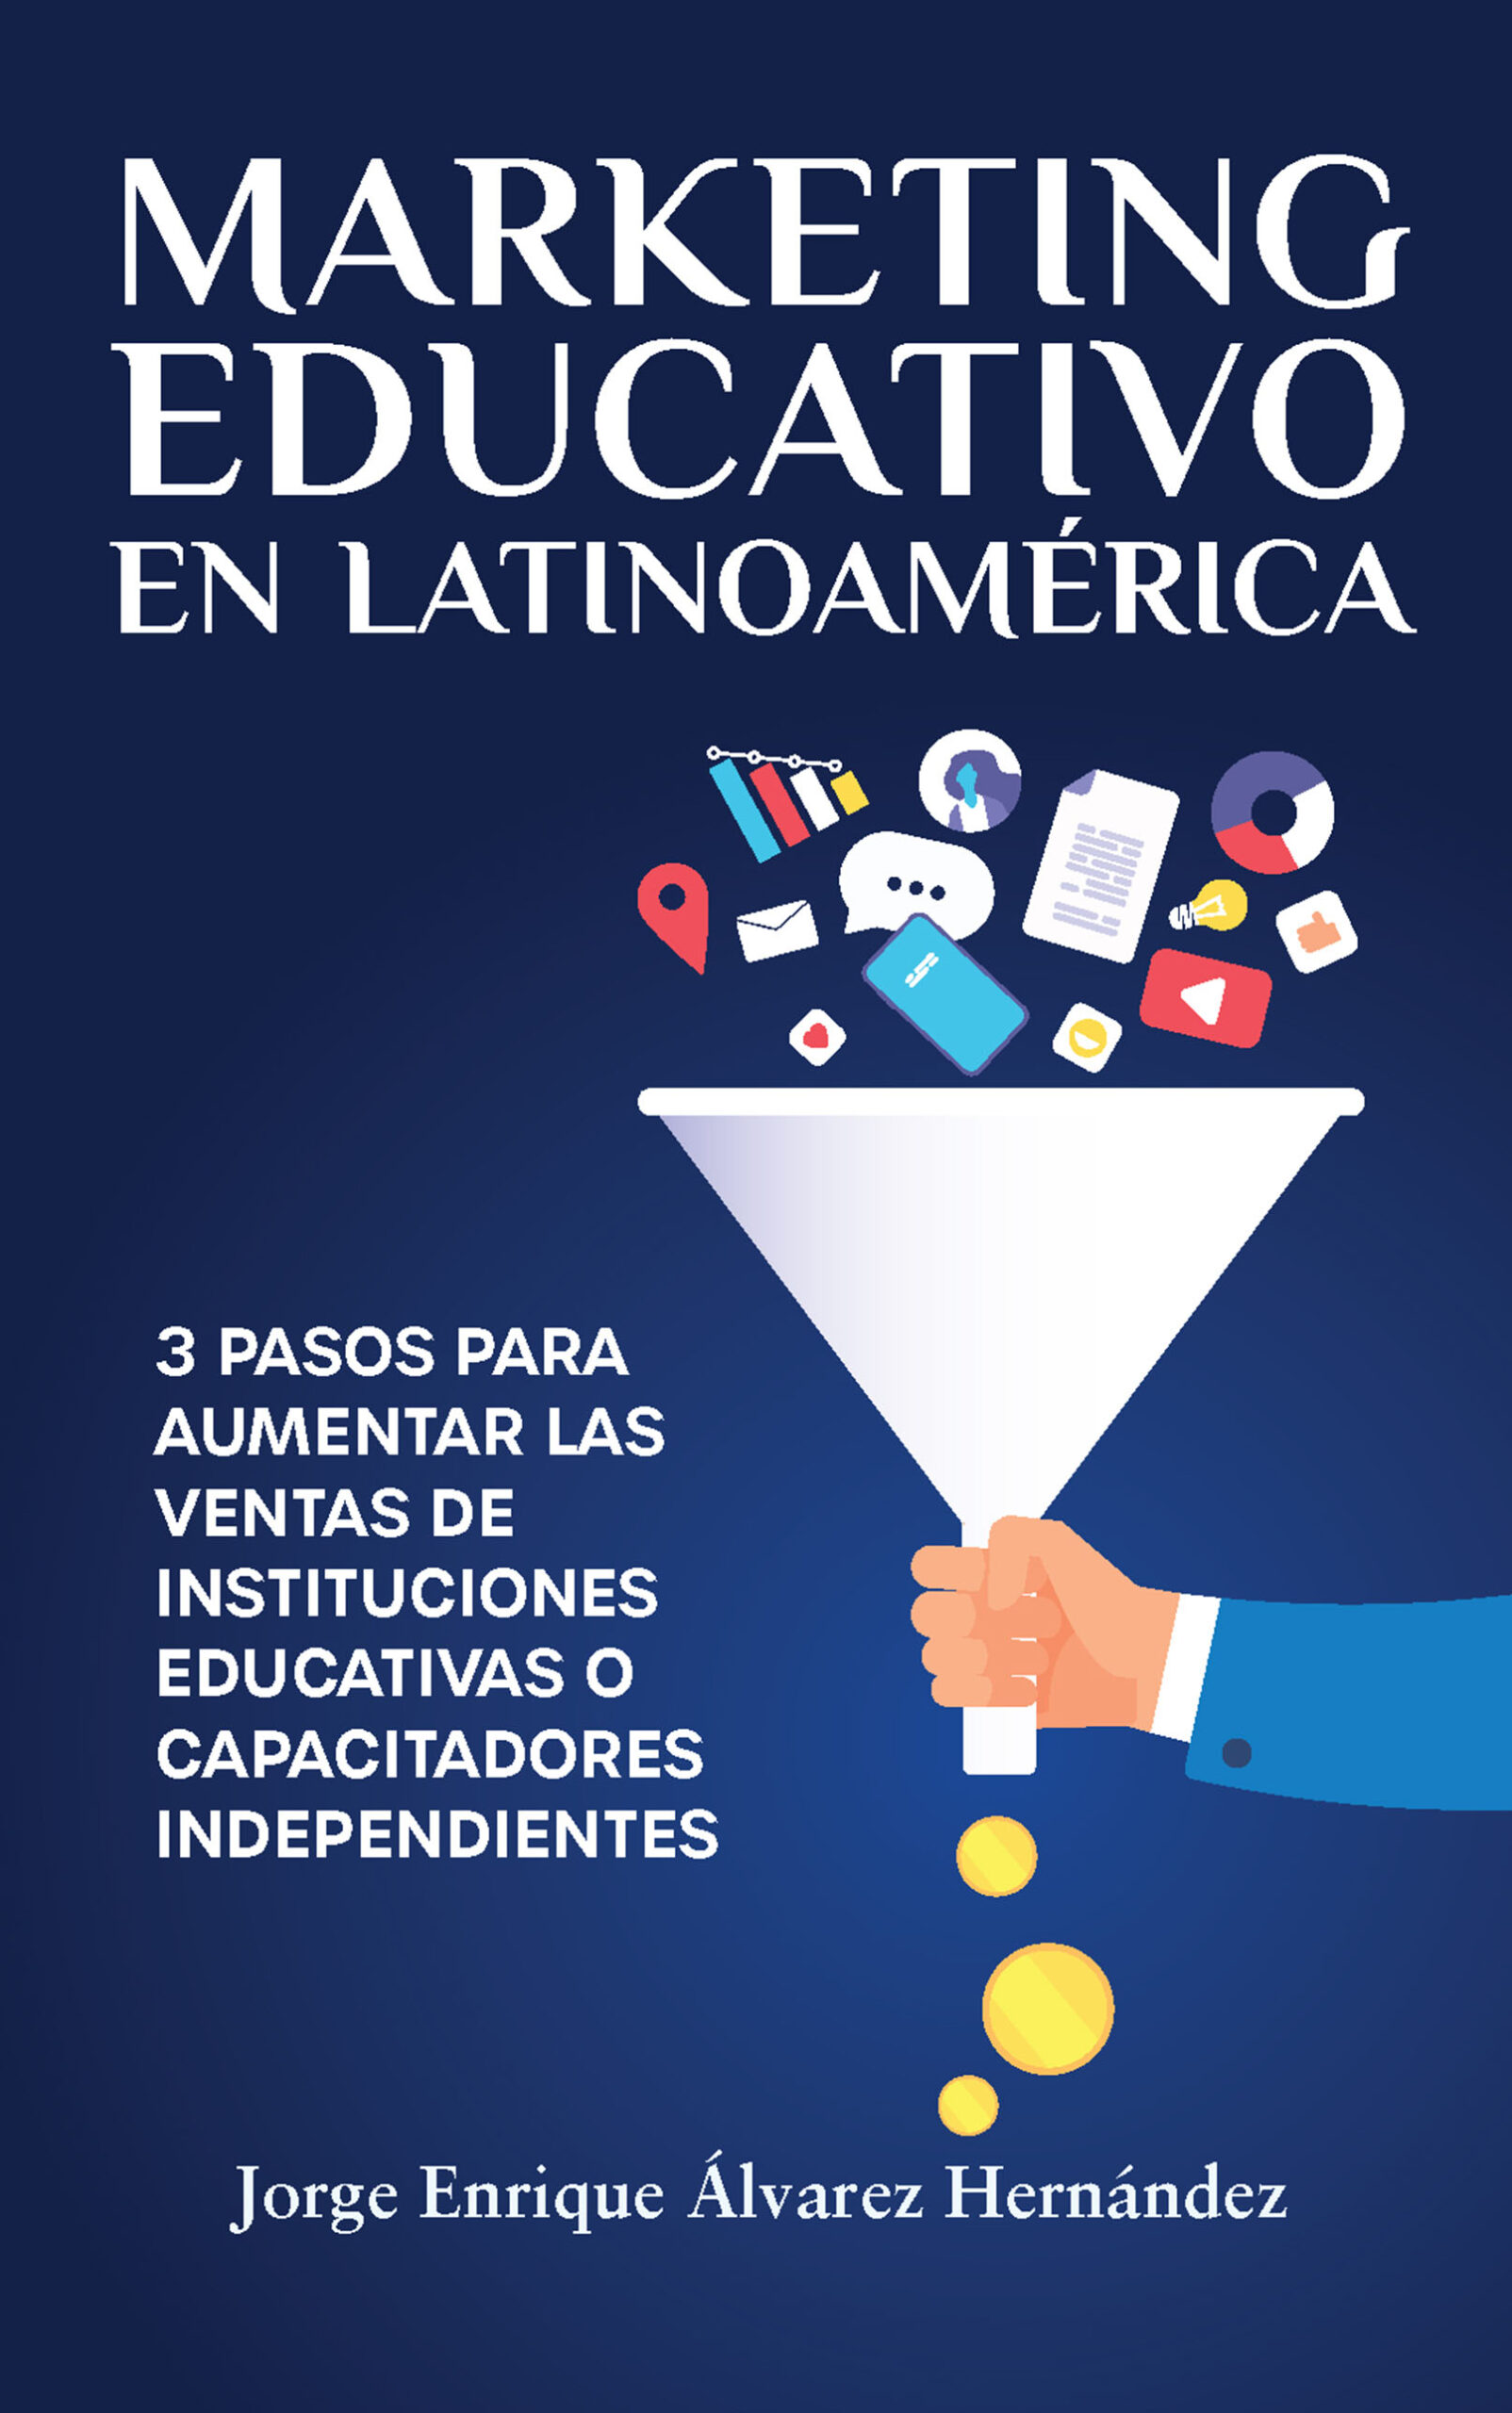 Marketing educativo en latinoamérica, de Jorge Enrique Álvarez Hernández